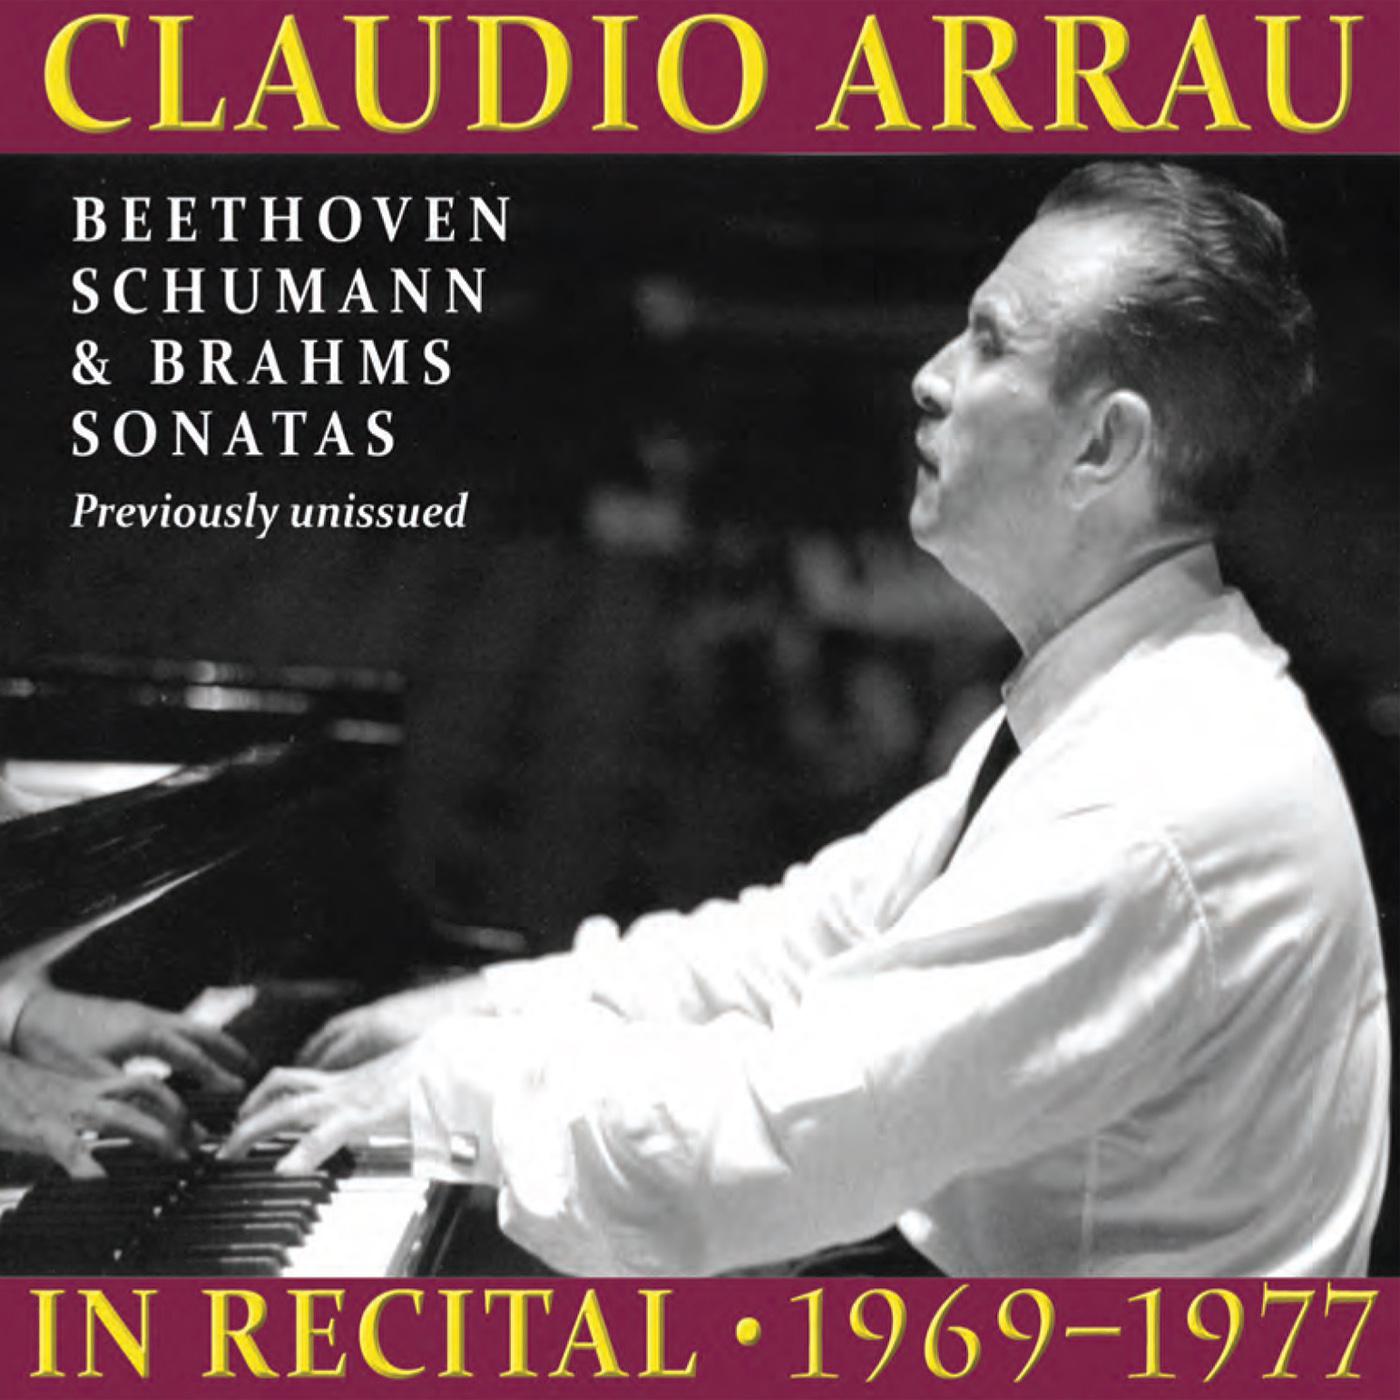 Piano Recital: Arrau, Claudio - BEETHOVEN, L. van / SCHUMANN, R. / BRAHMS, J. (In Recital) (1969-197专辑